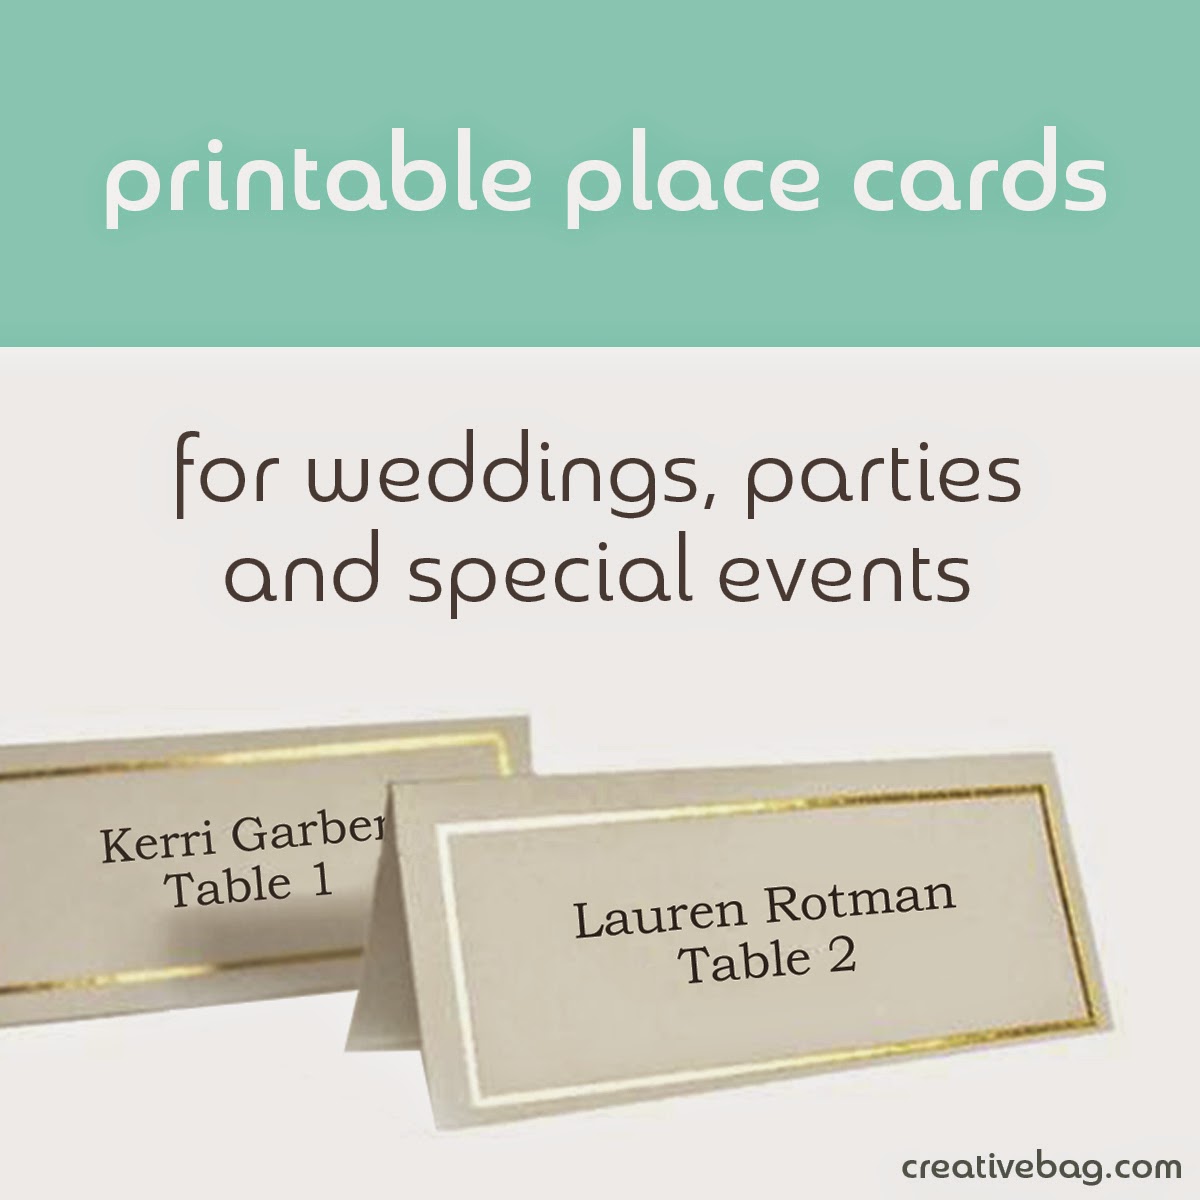 printable place cards | Creative Bag